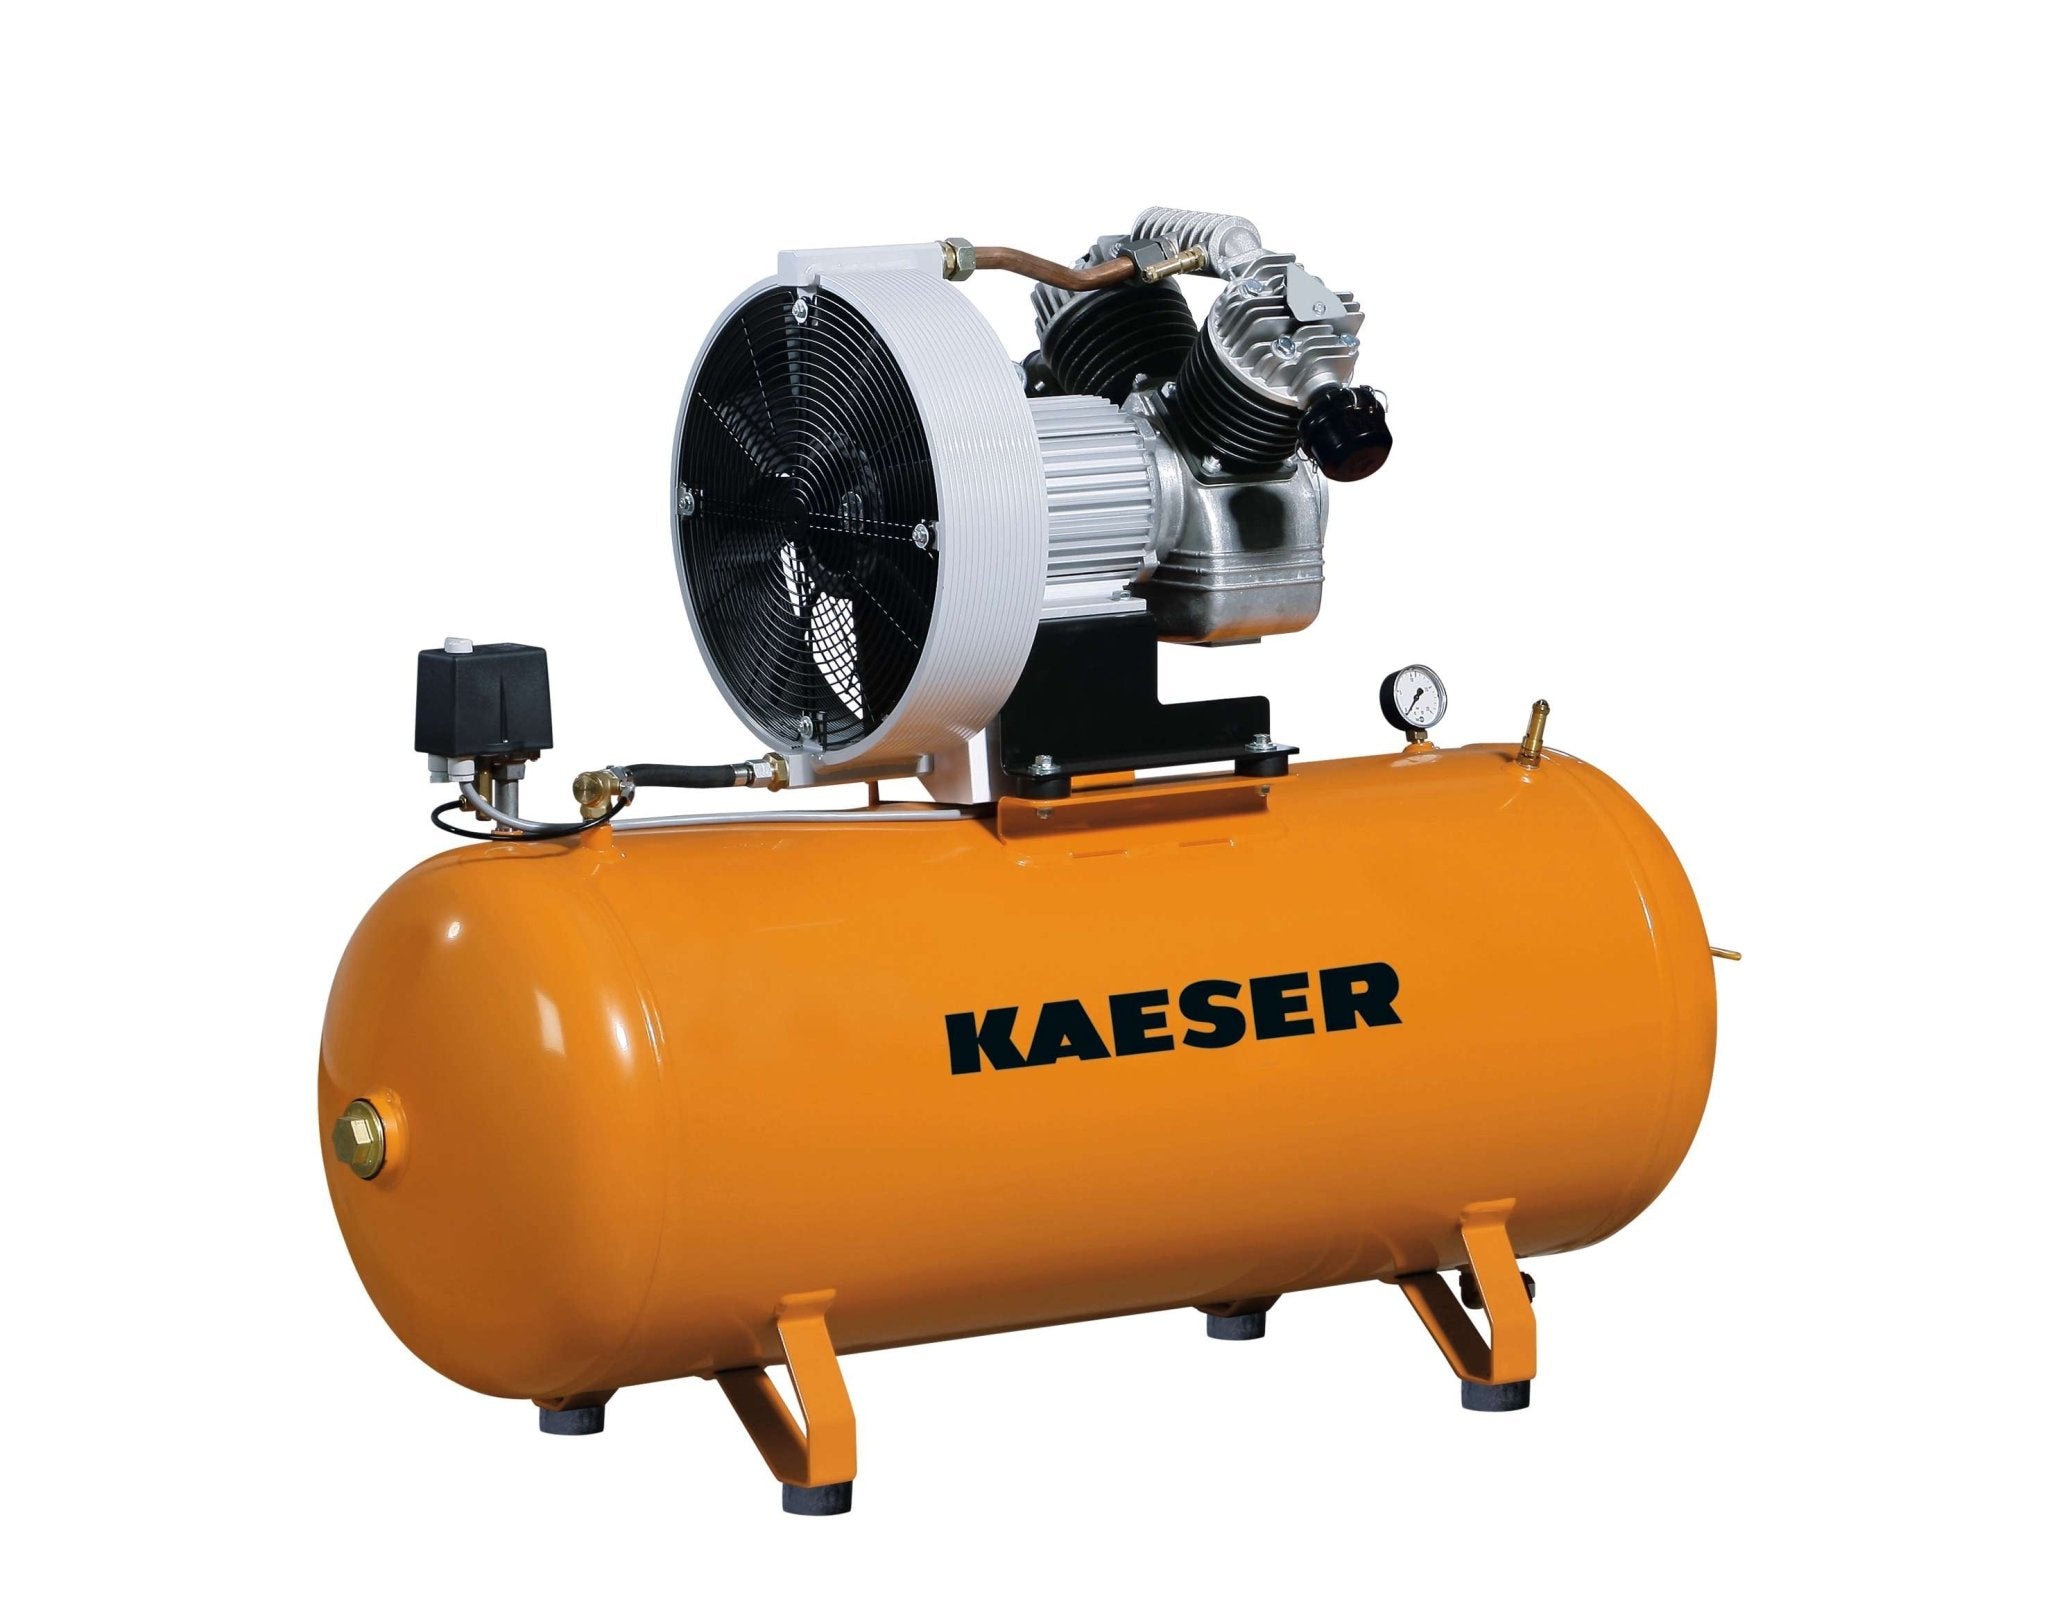 Kaeser piston compressor EPC 630-250 400/3/50